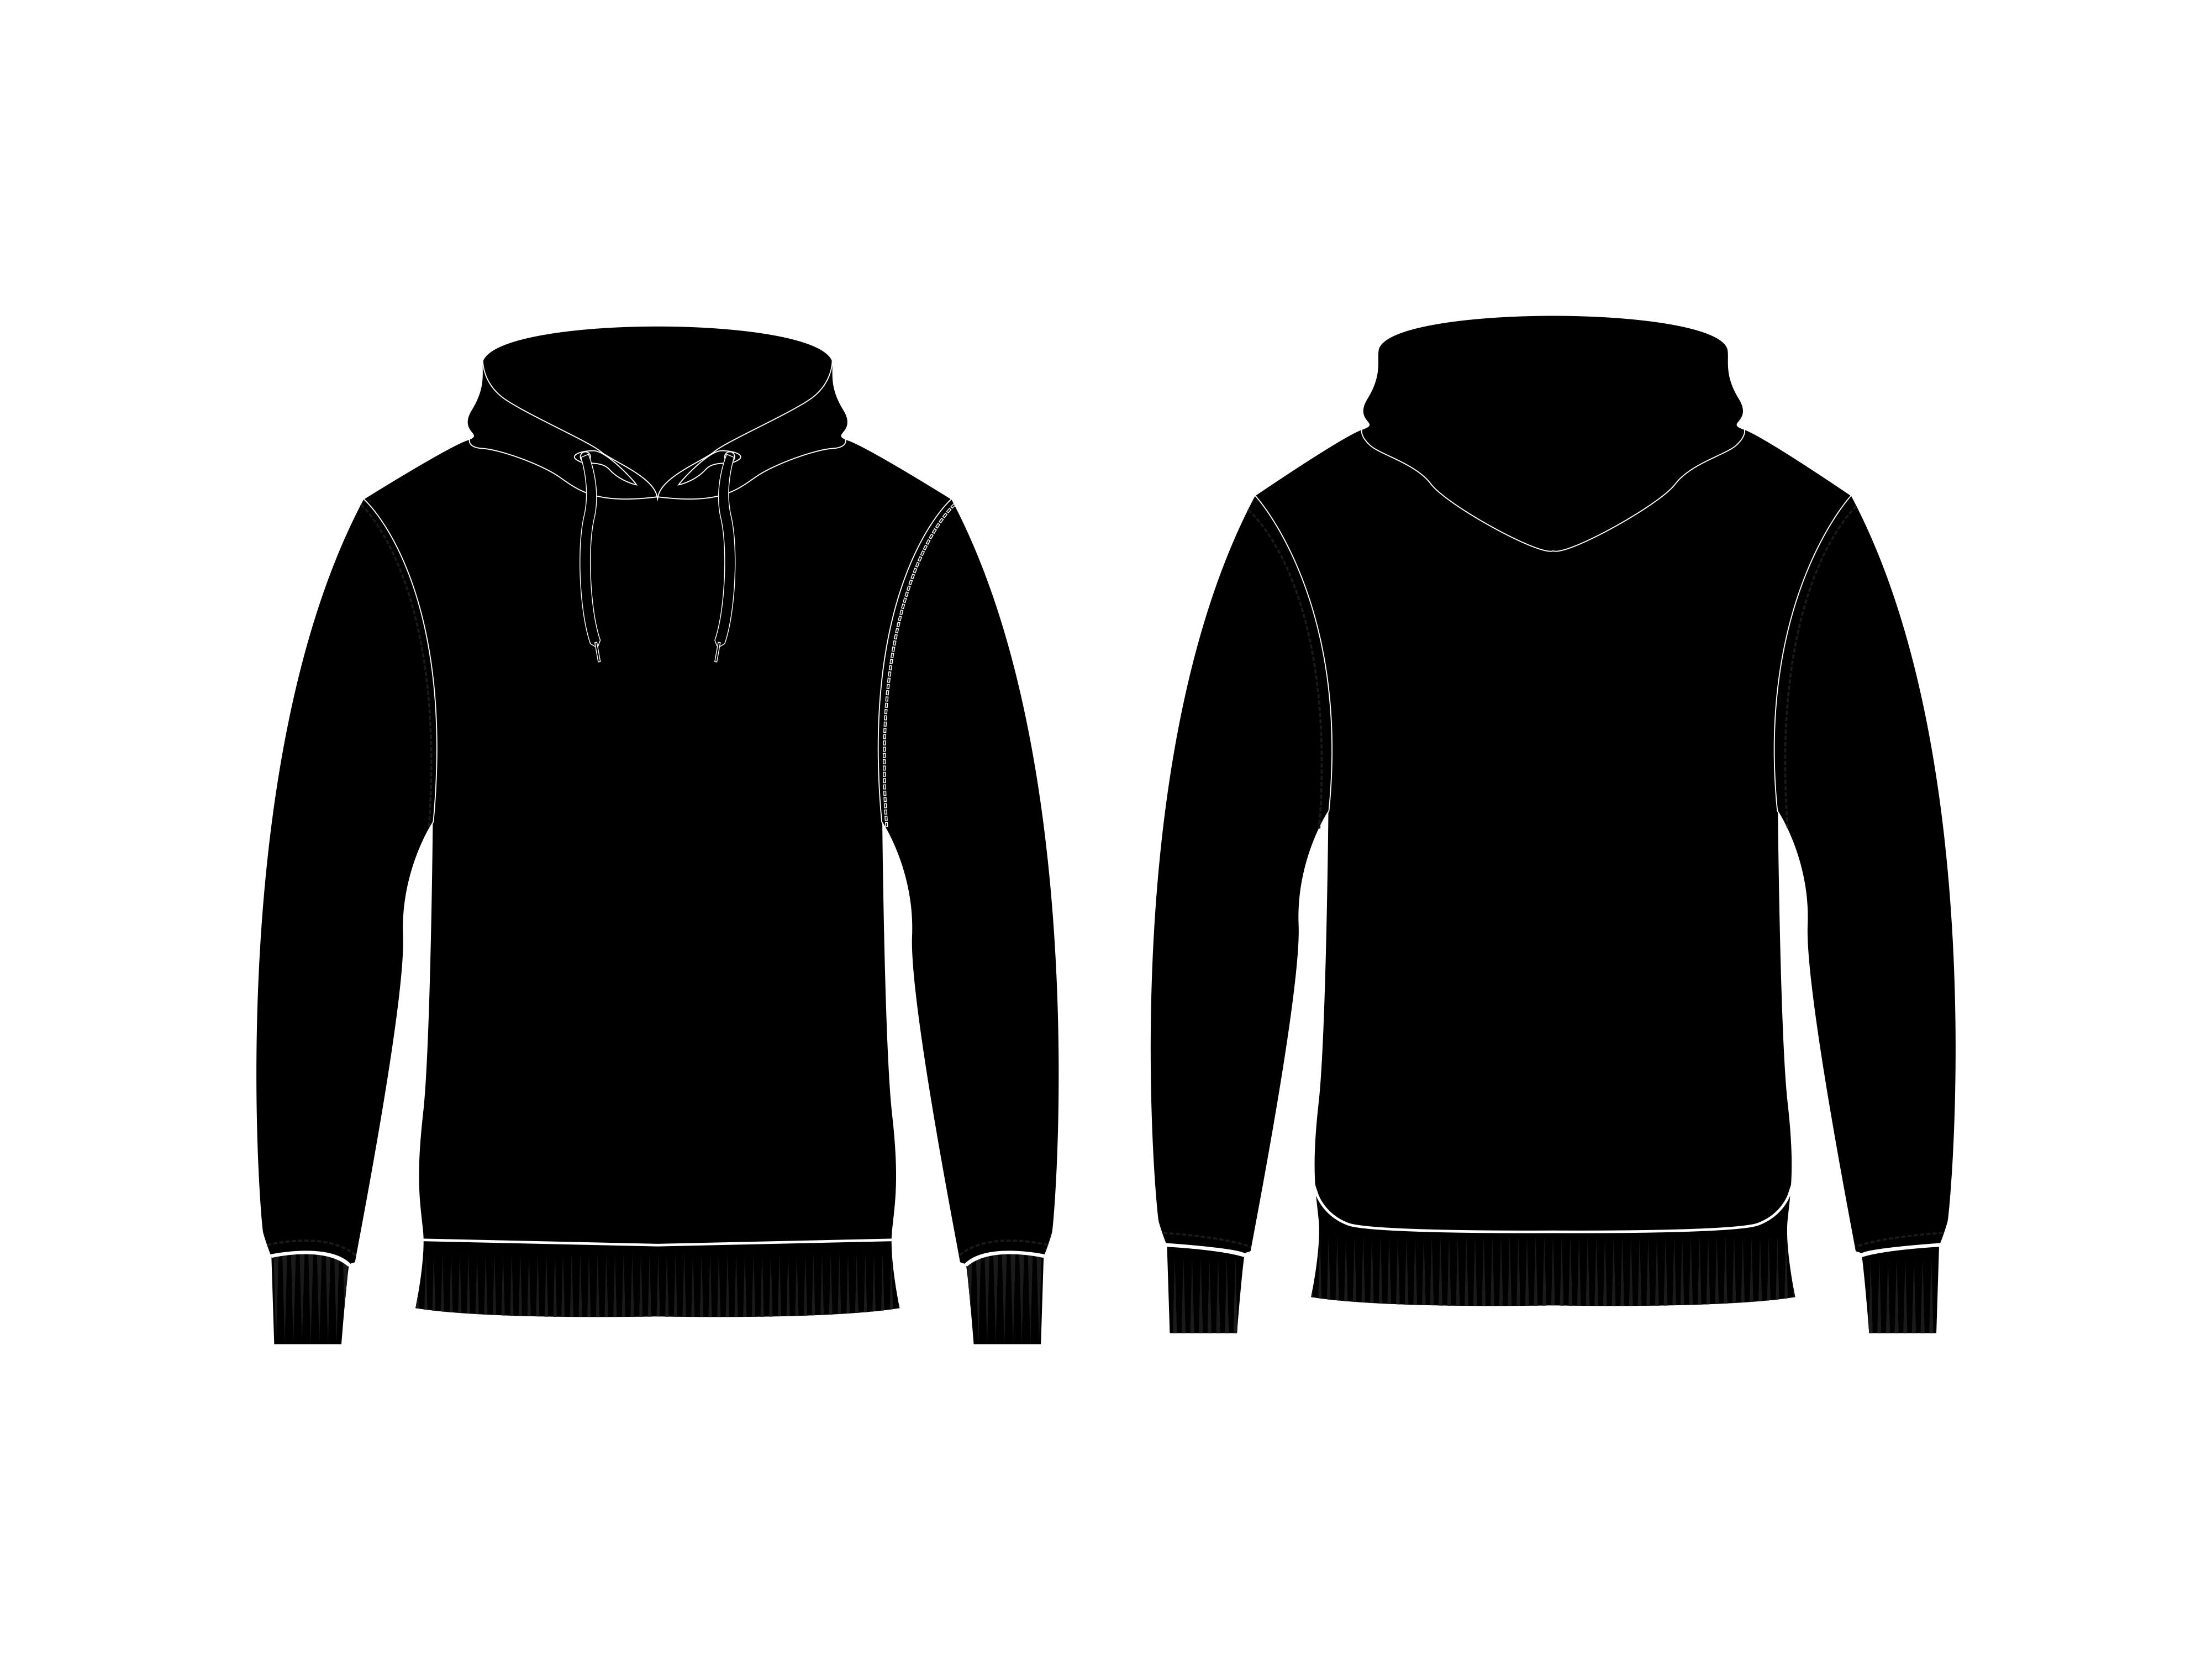 Hoodie Sweatshirt Black Front and Back Graphic by Idrdesign · Creative  Fabrica